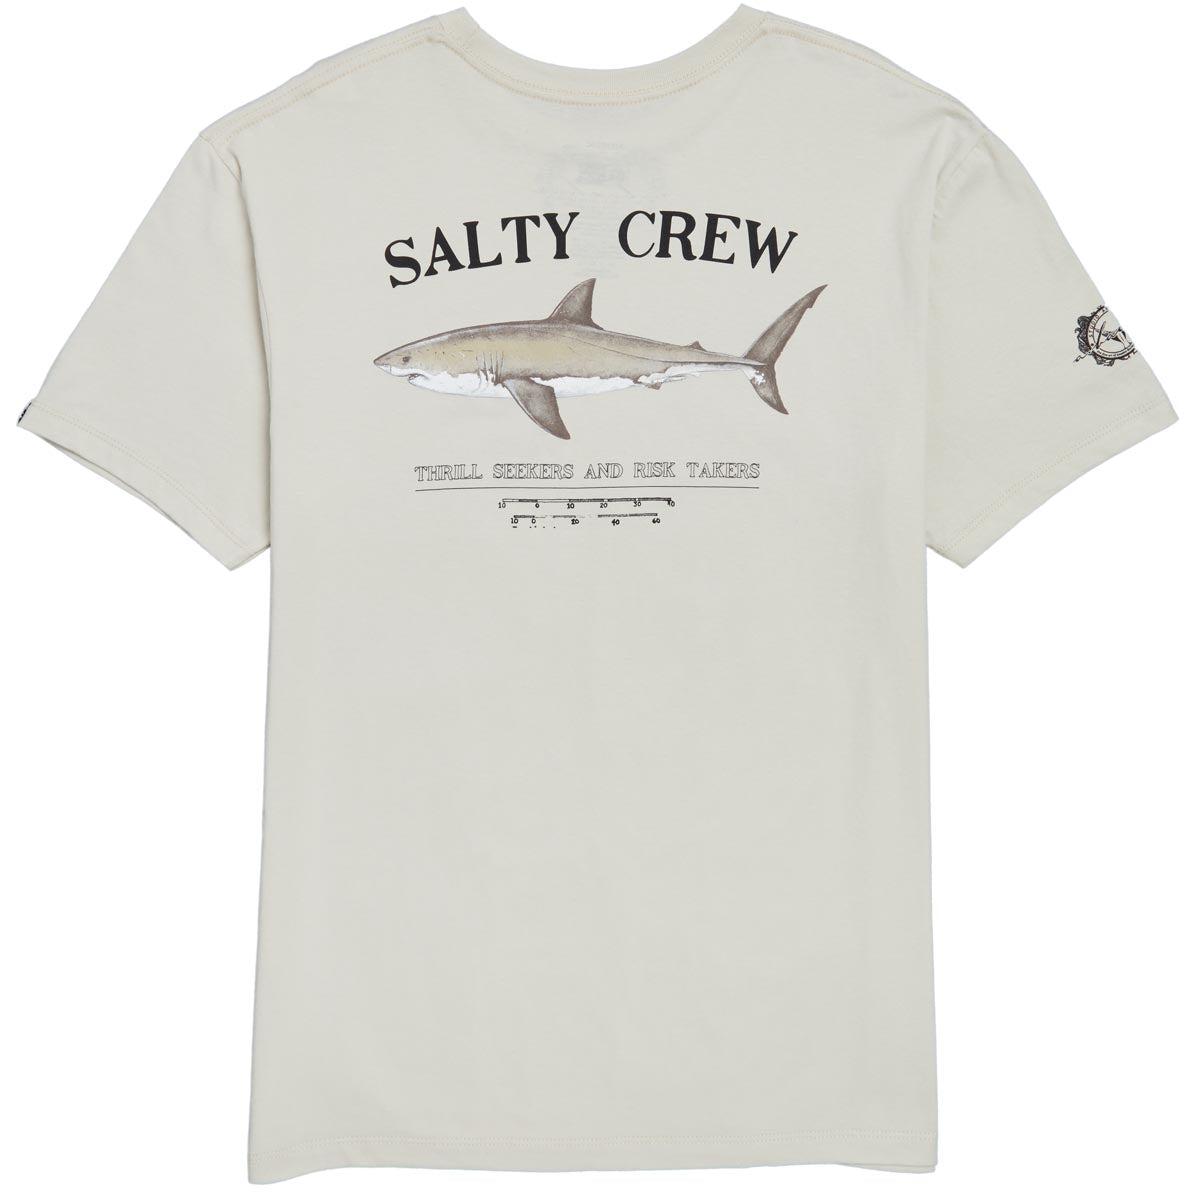 Salty Crew Bruce T-Shirt - Bone image 1